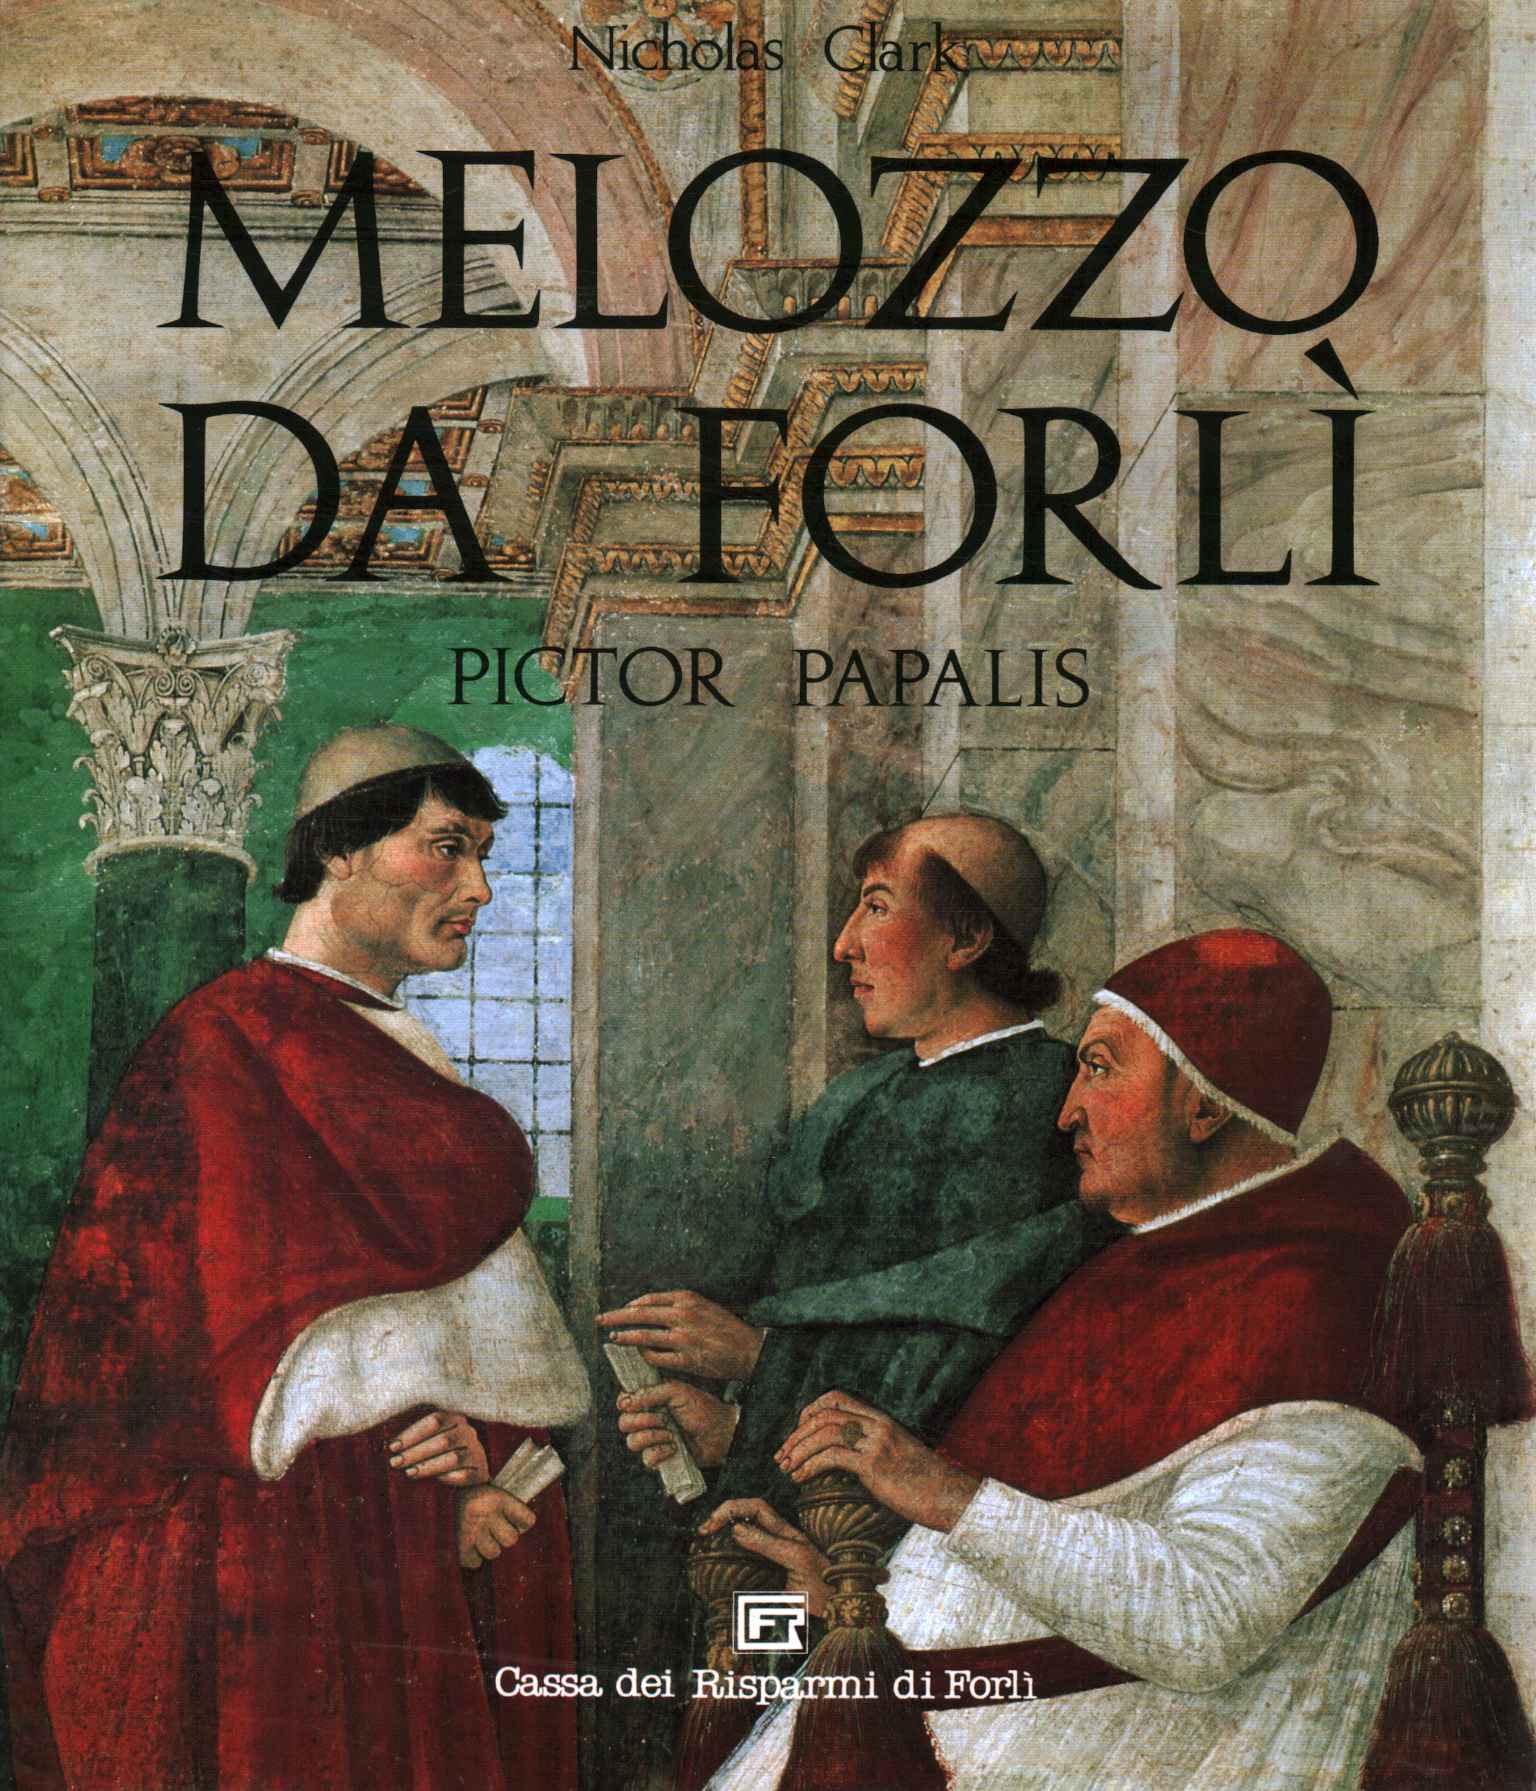 Melozzo de Forlì